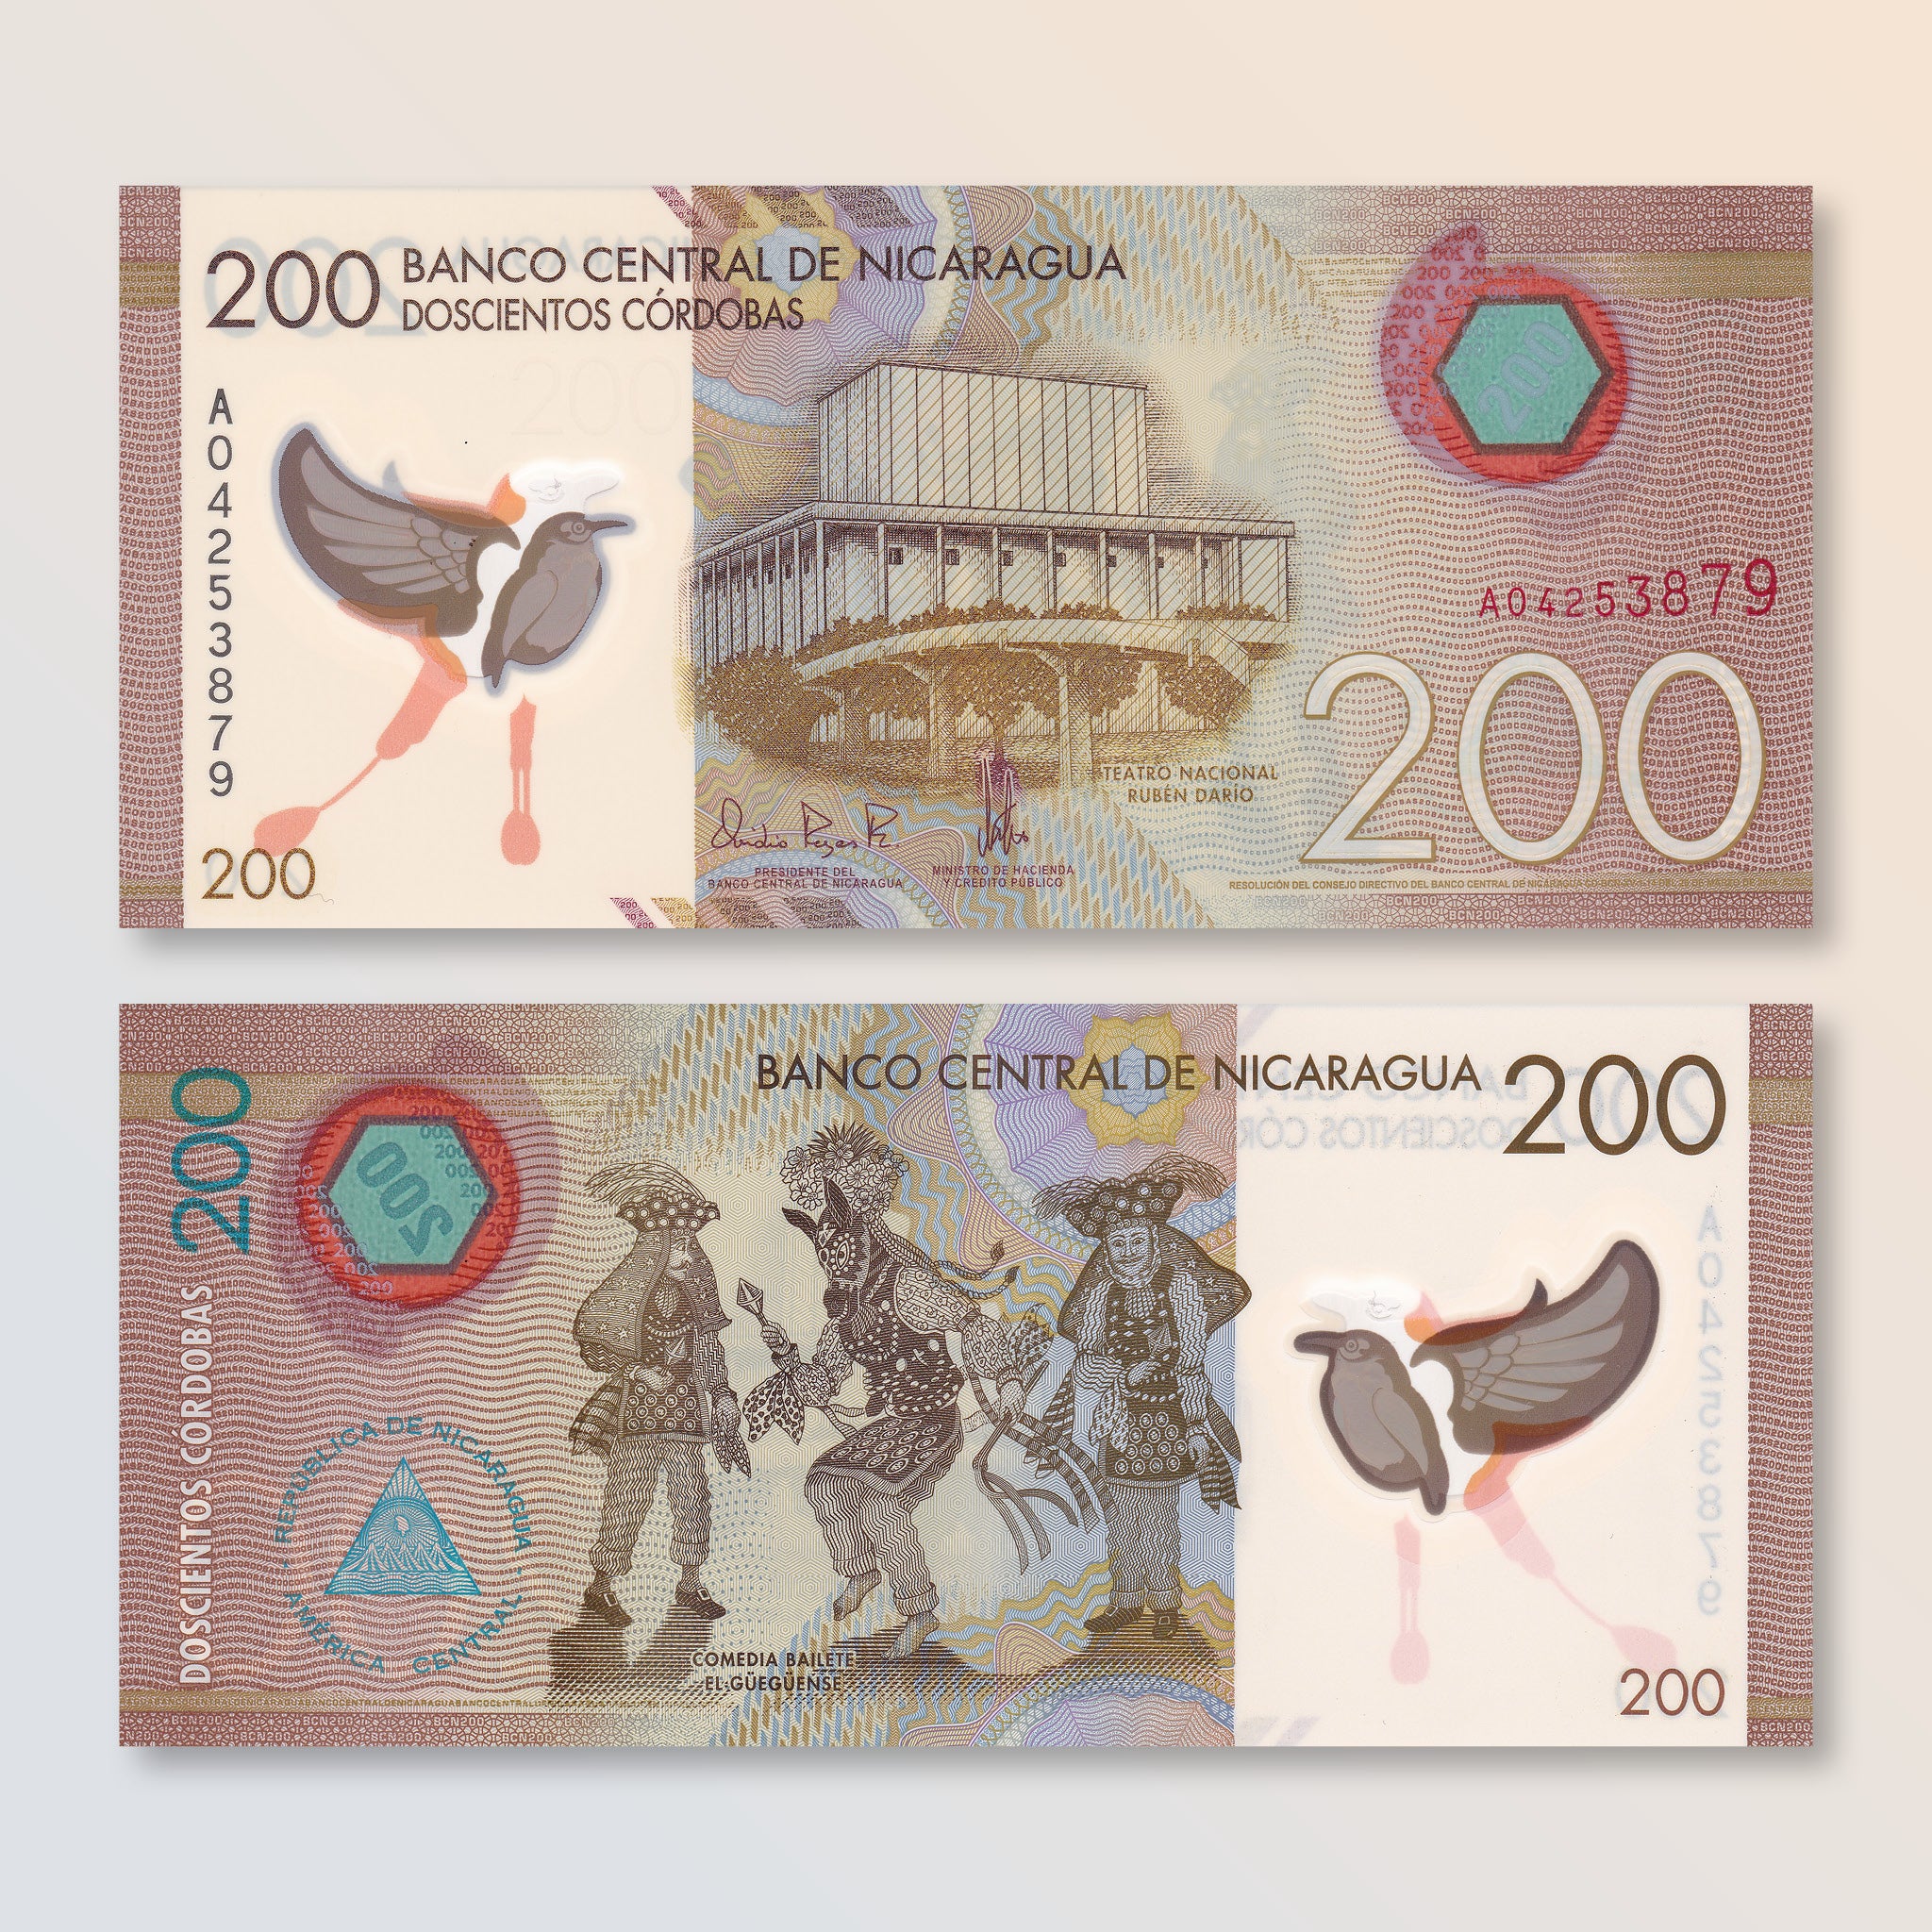 Nicaragua 200 Córdobas, 2014, B510a, P213a, UNC - Robert's World Money - World Banknotes